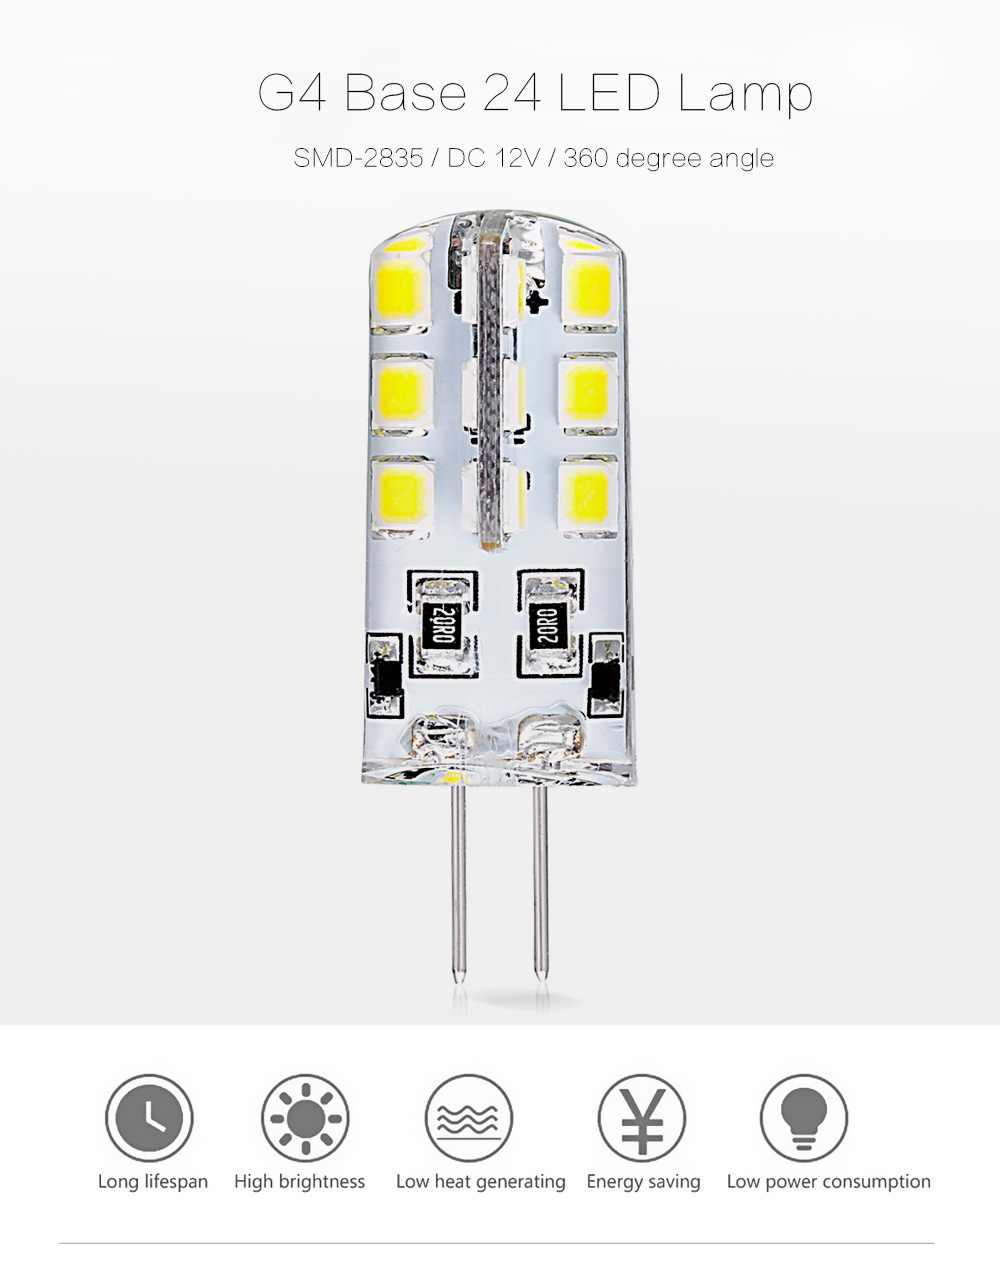 10pcs 1.8 - 2.2W G4 Base 24 LED Lamp DC 12V Warm White Light Undimmable 360 Degrees Beam Angle